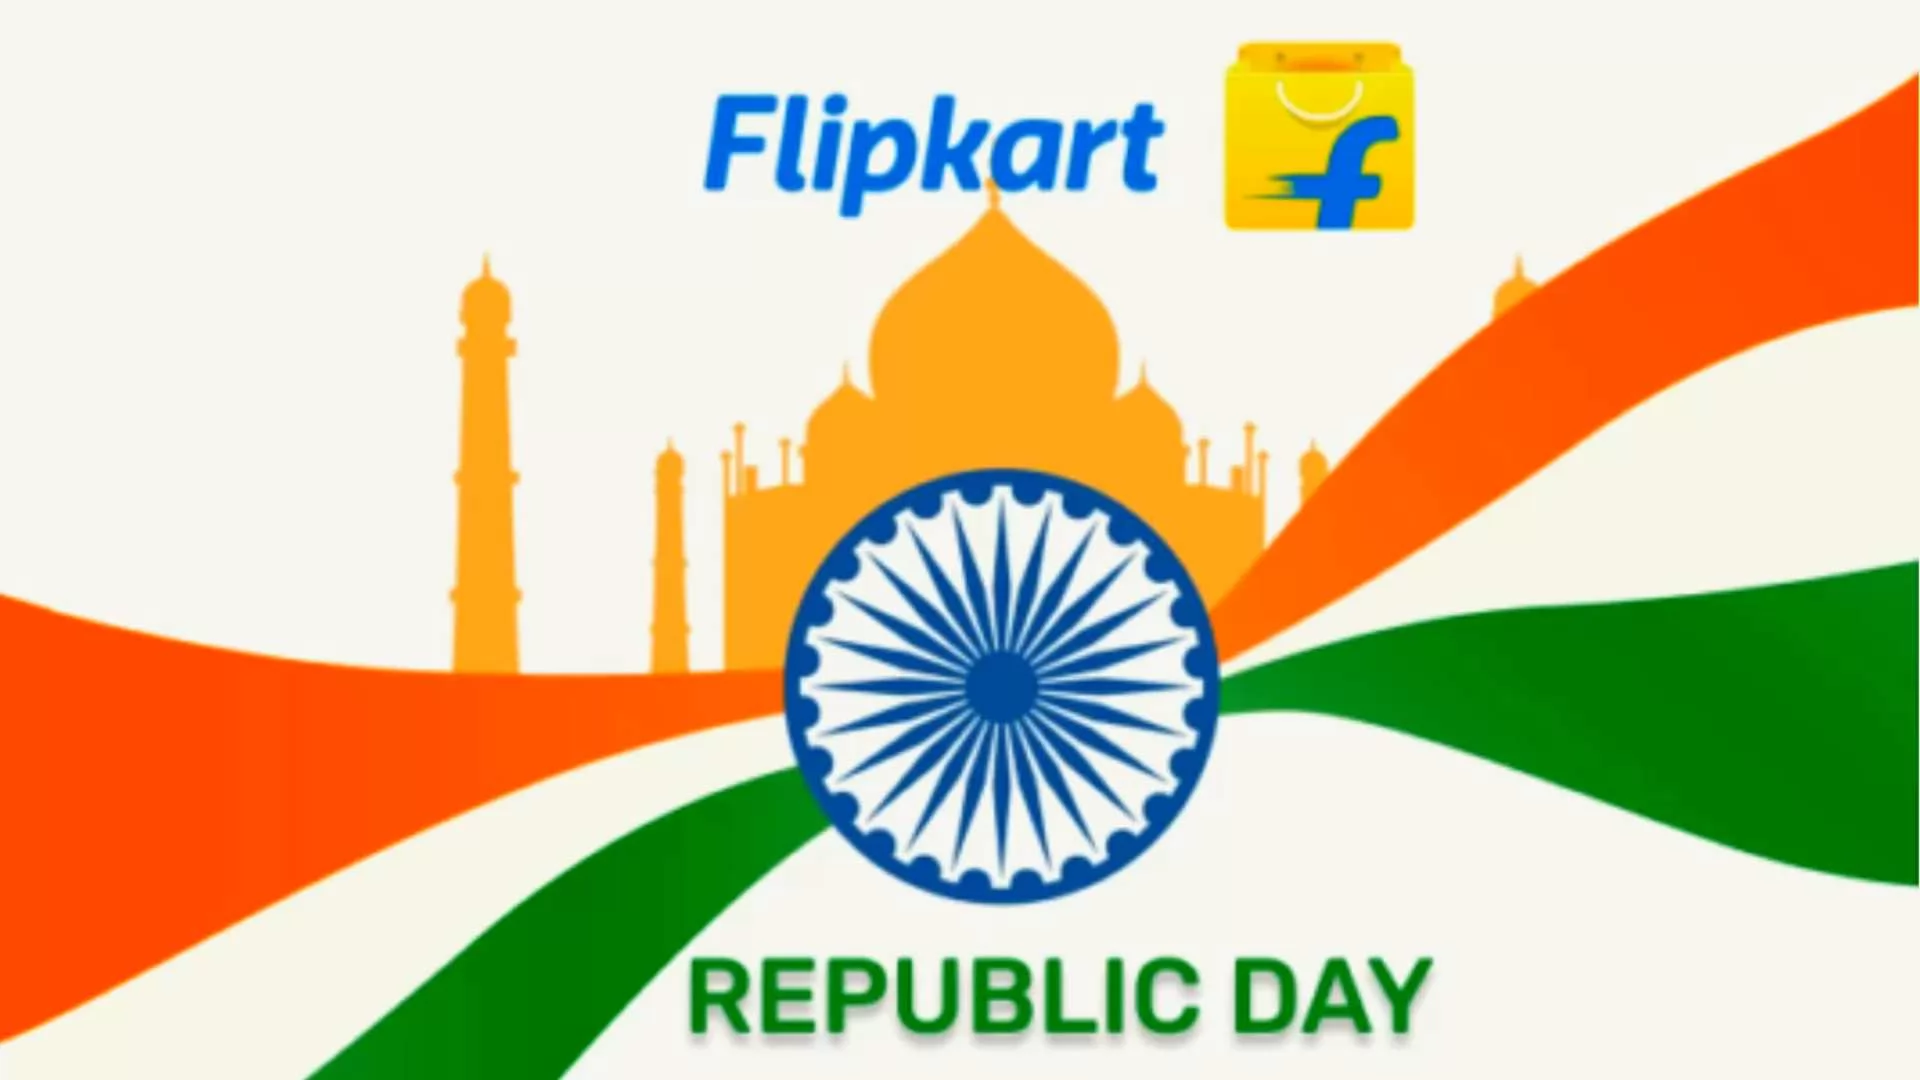  Flipkart Republic Day Sale